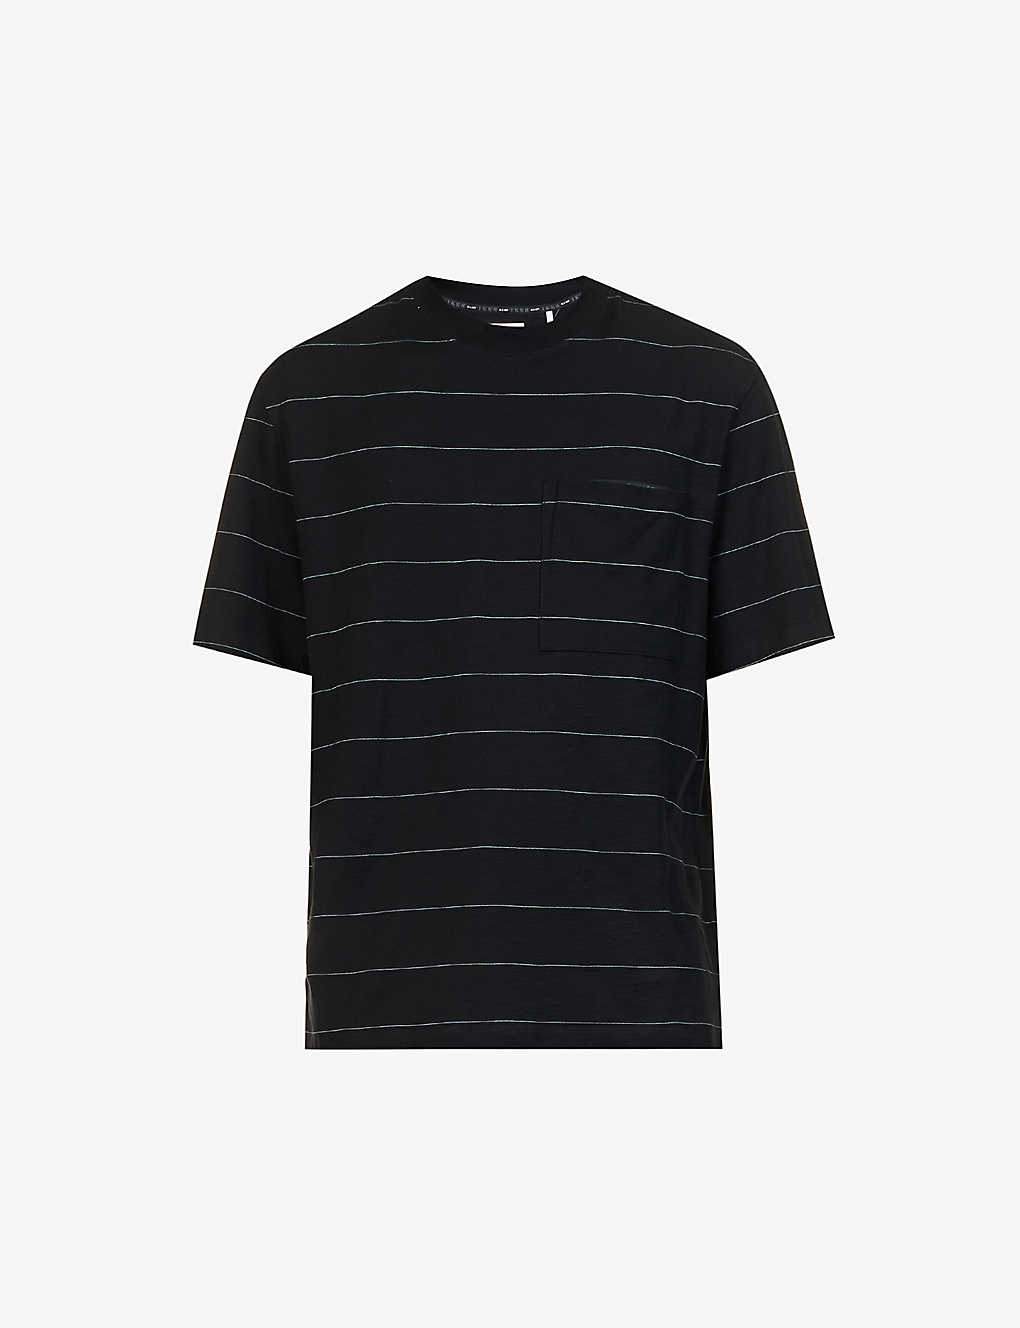 Ikks Mens Noir Stripe-pattern Crewneck Cotton-blend T-shirt